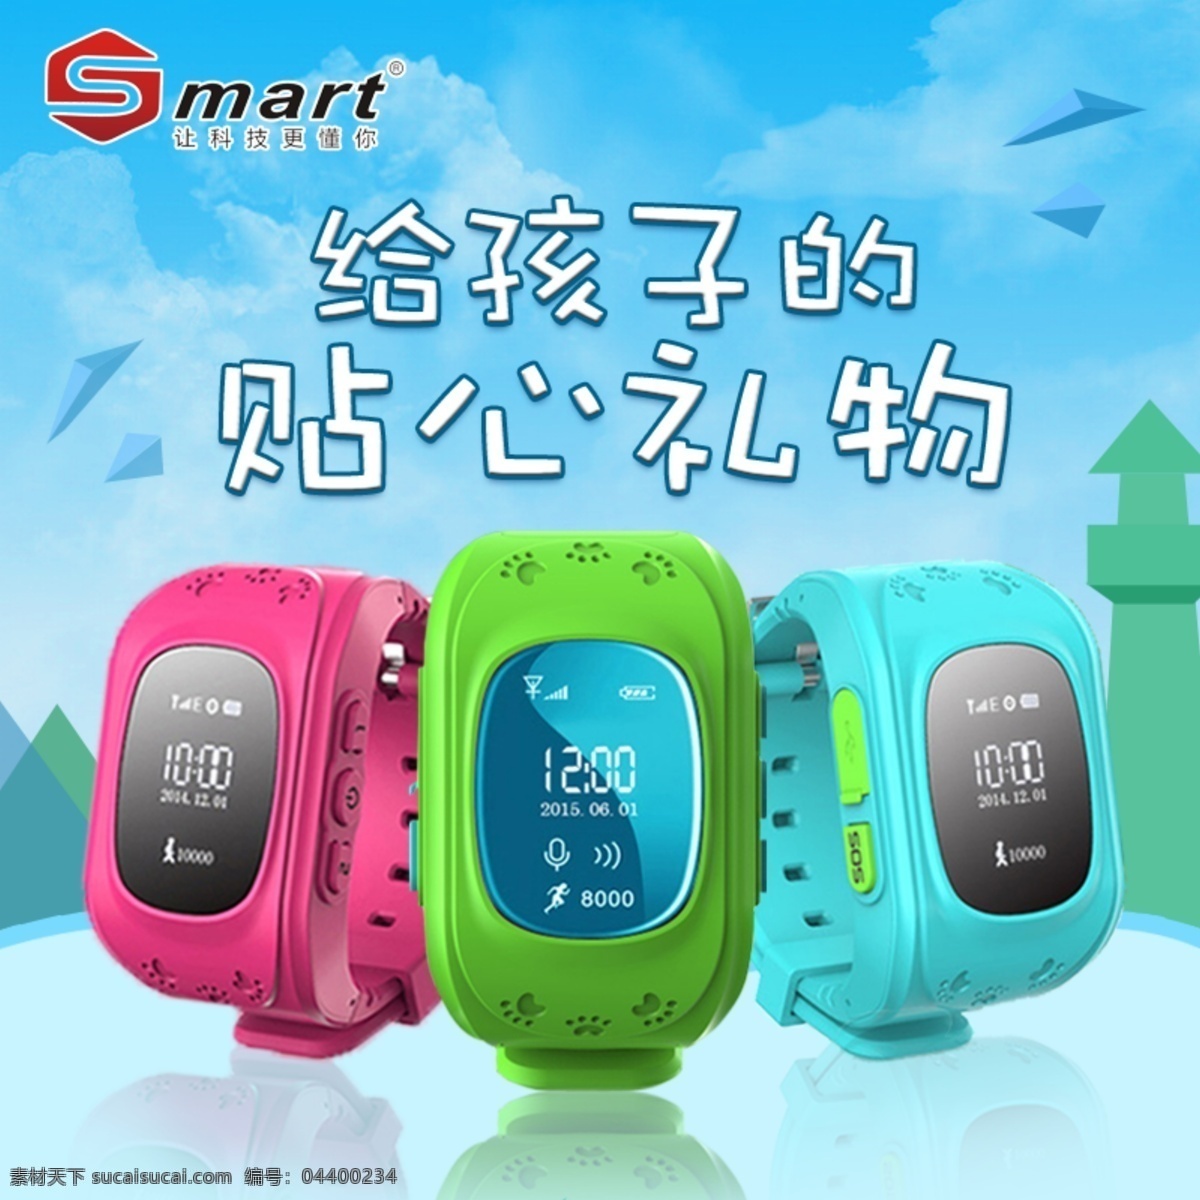 smart3g 智能 手表 淘宝 主 图 童趣 扁平风背景 儿童智能手表 青色 天蓝色